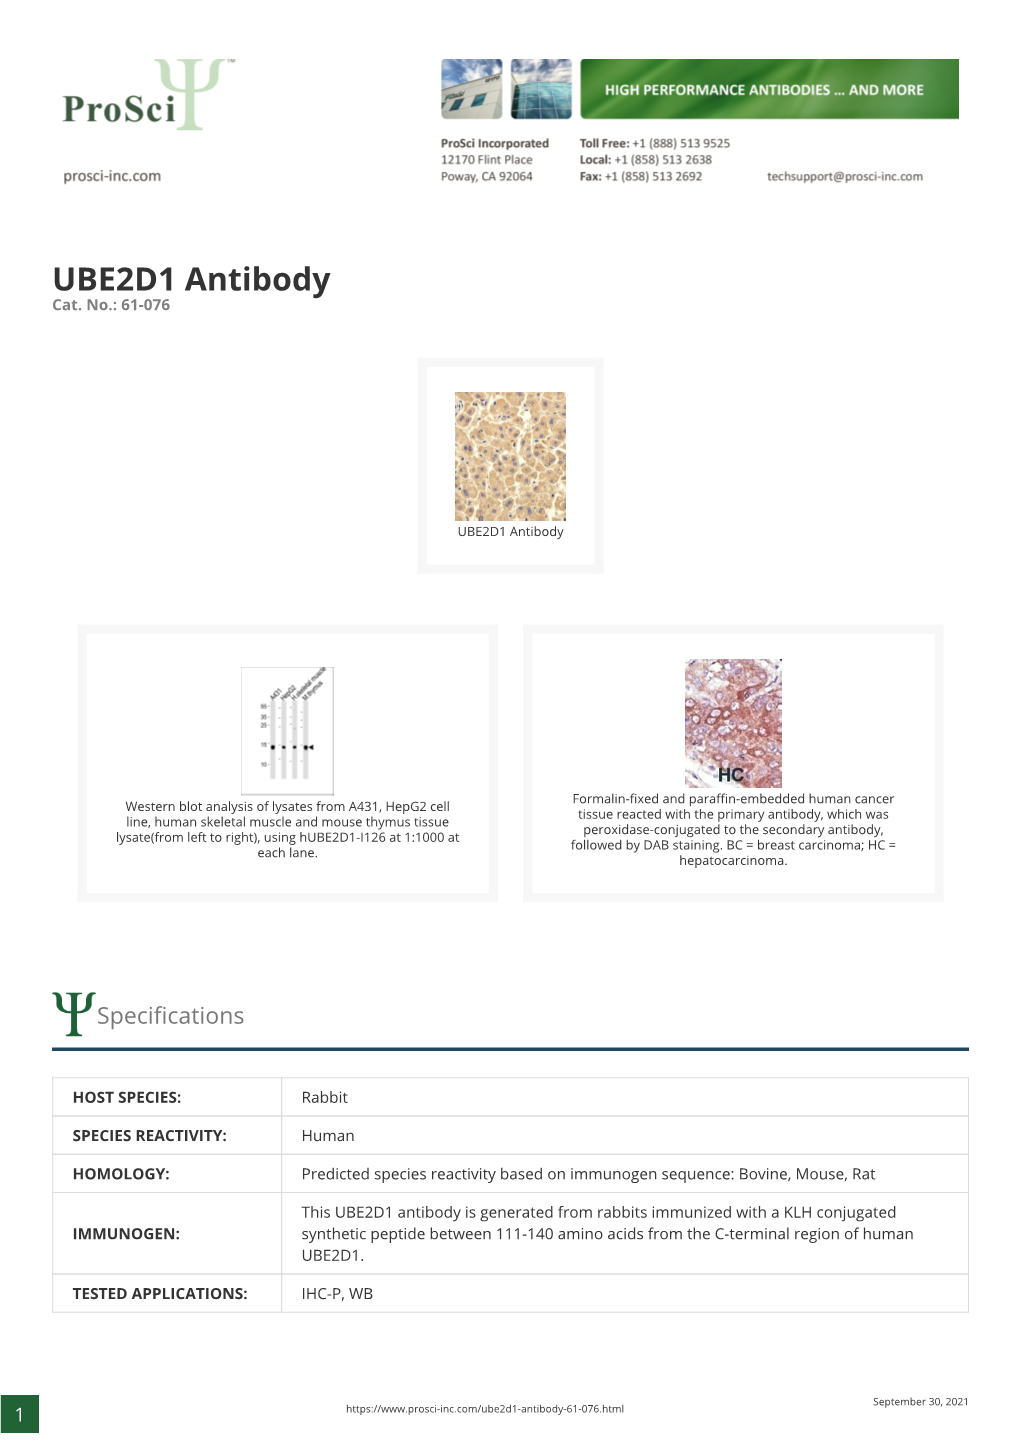 UBE2D1 Antibody Cat